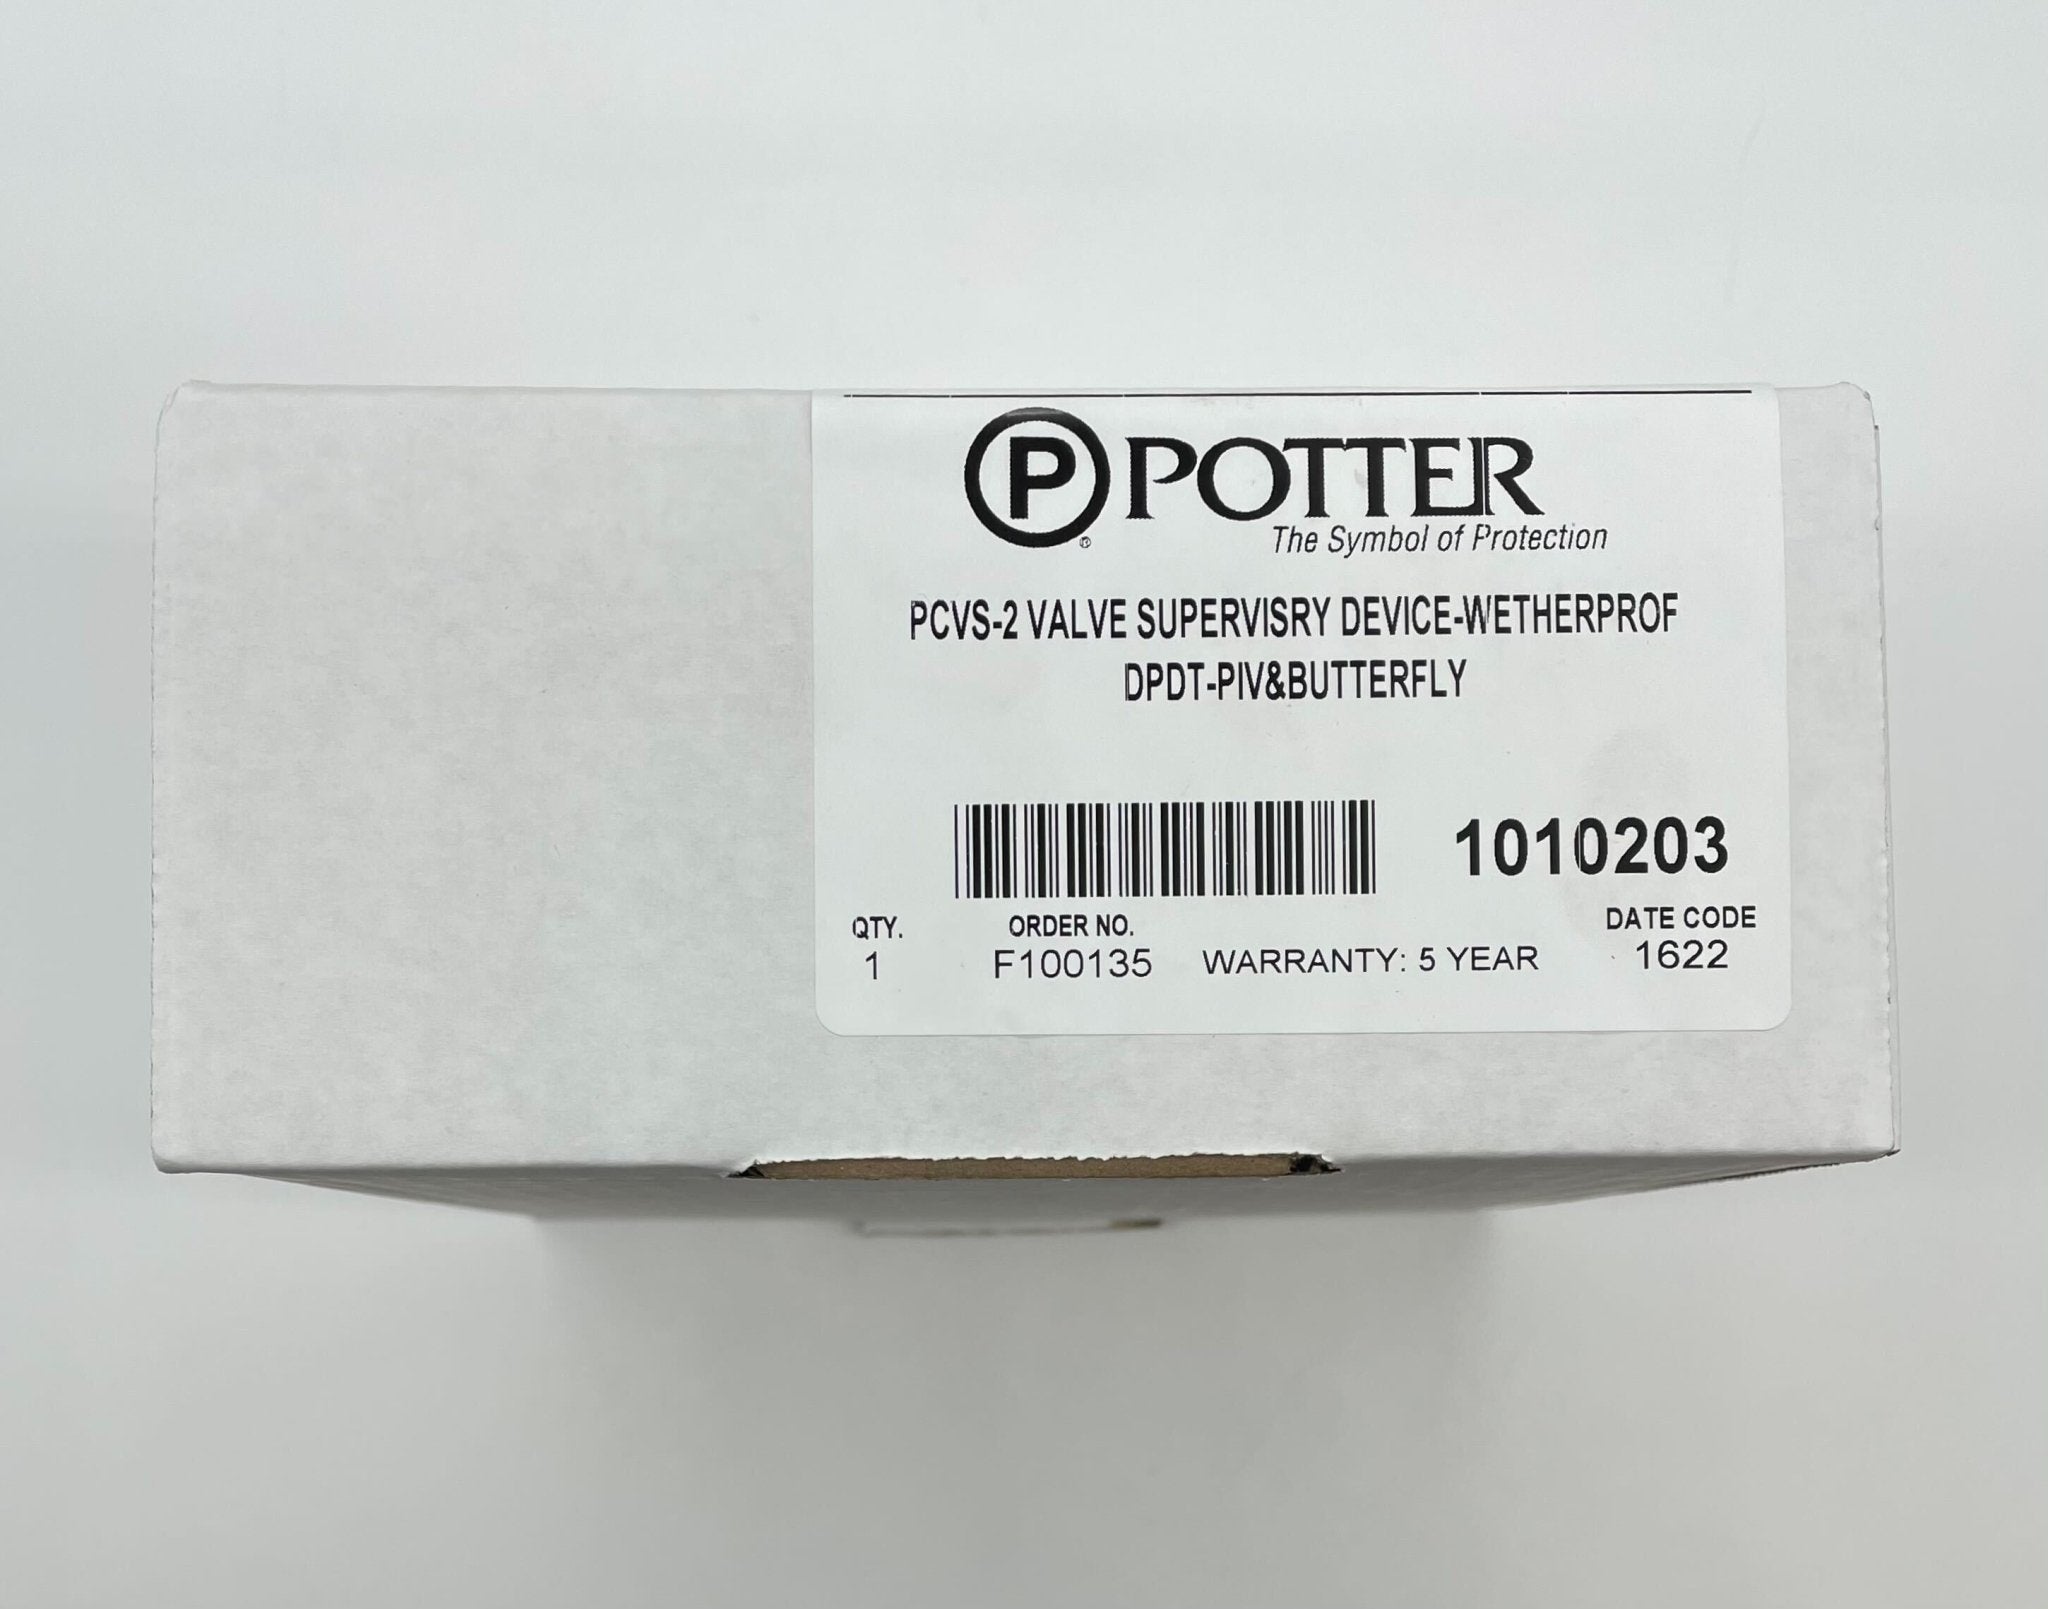 Potter PCVS-2 - The Fire Alarm Supplier